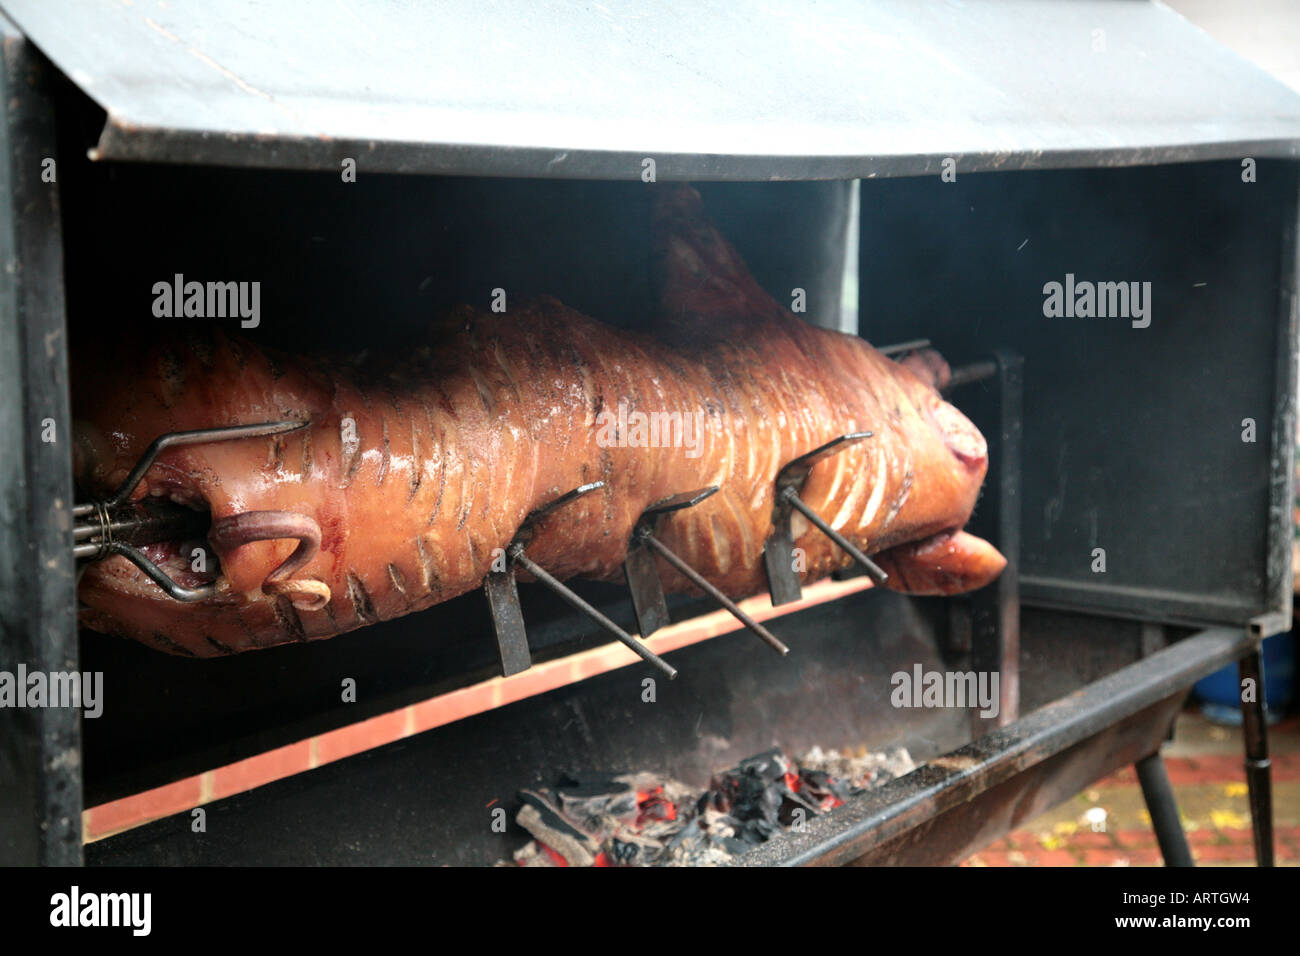 hog roast on spit Stock Photo